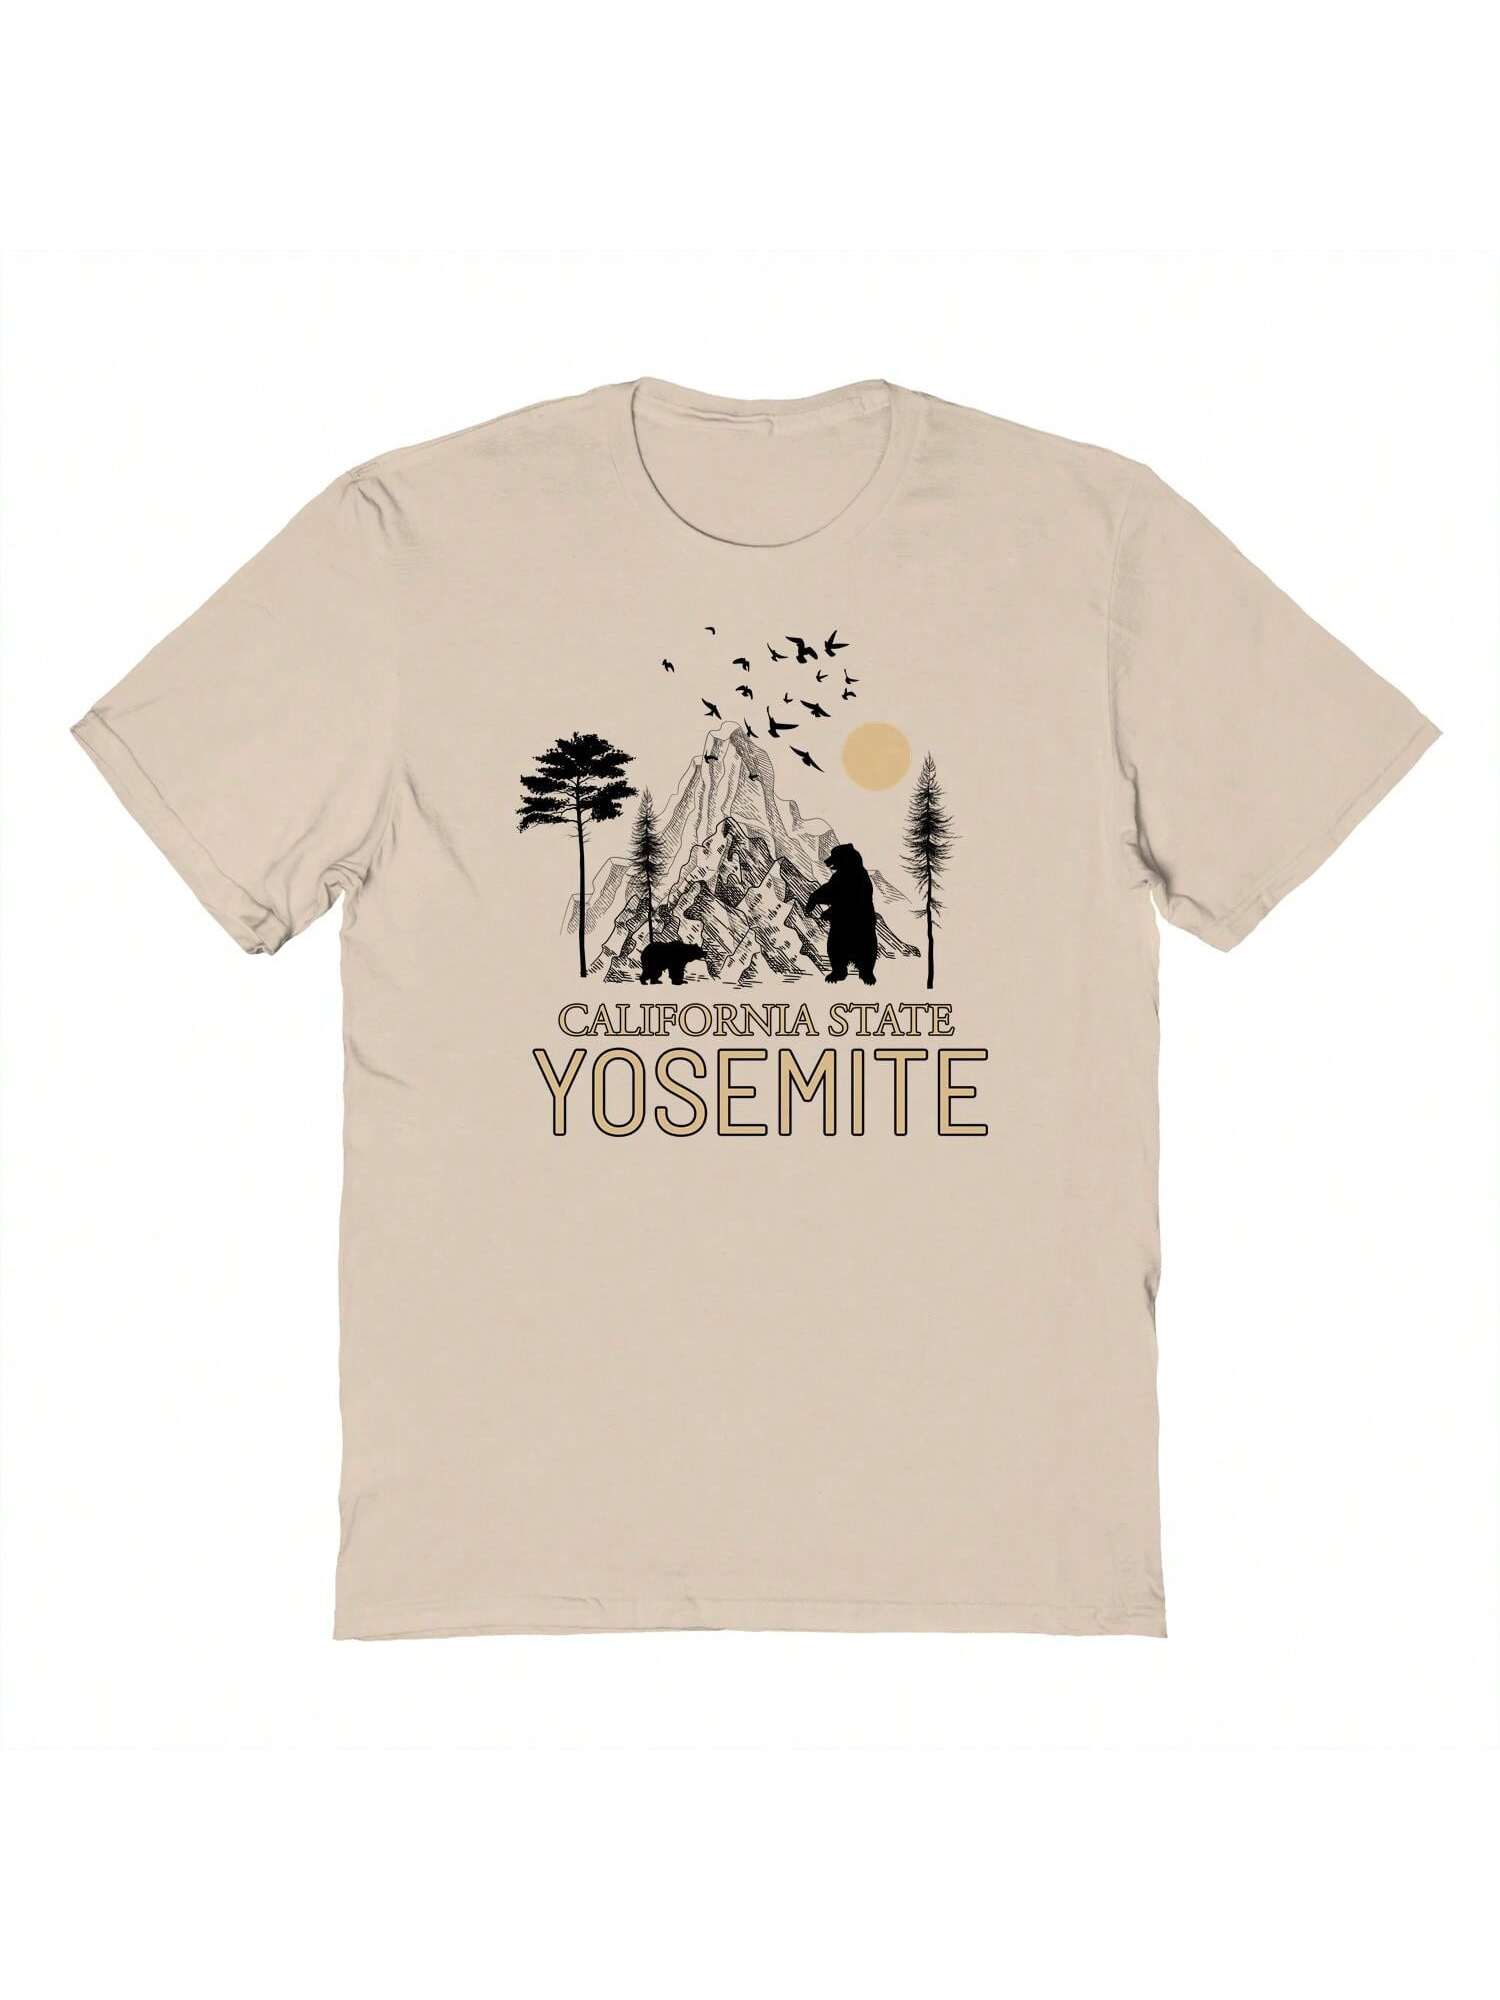 Мужская хлопковая футболка с короткими рукавами Country Parks California State Yose Mite Graphic Sand, бежевый sublimox oxalic acid sublimator beekeeping varroa mite 110v